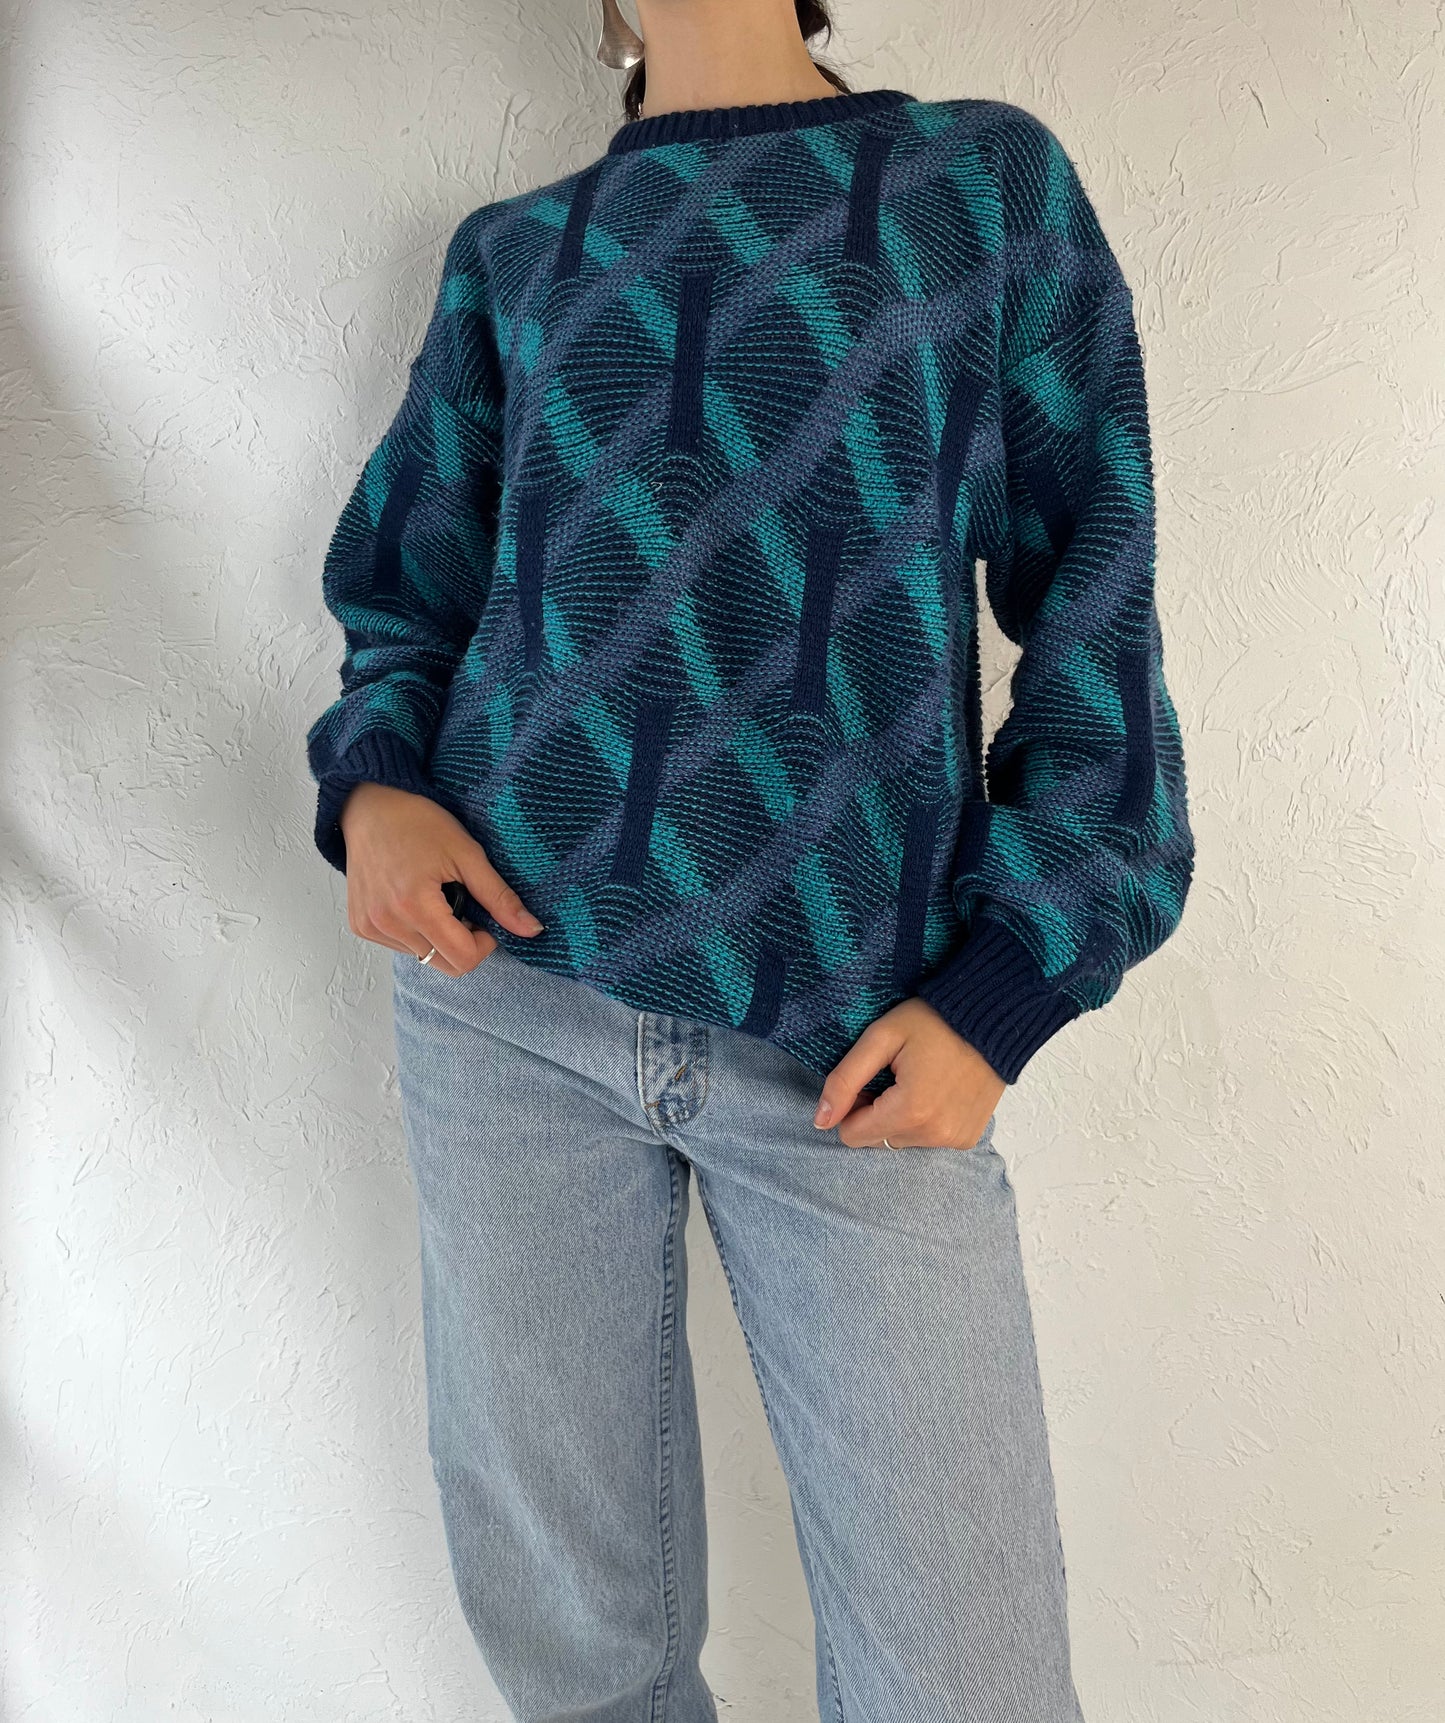 Vintage 'St Michael' Blue Knit Sweater / Large